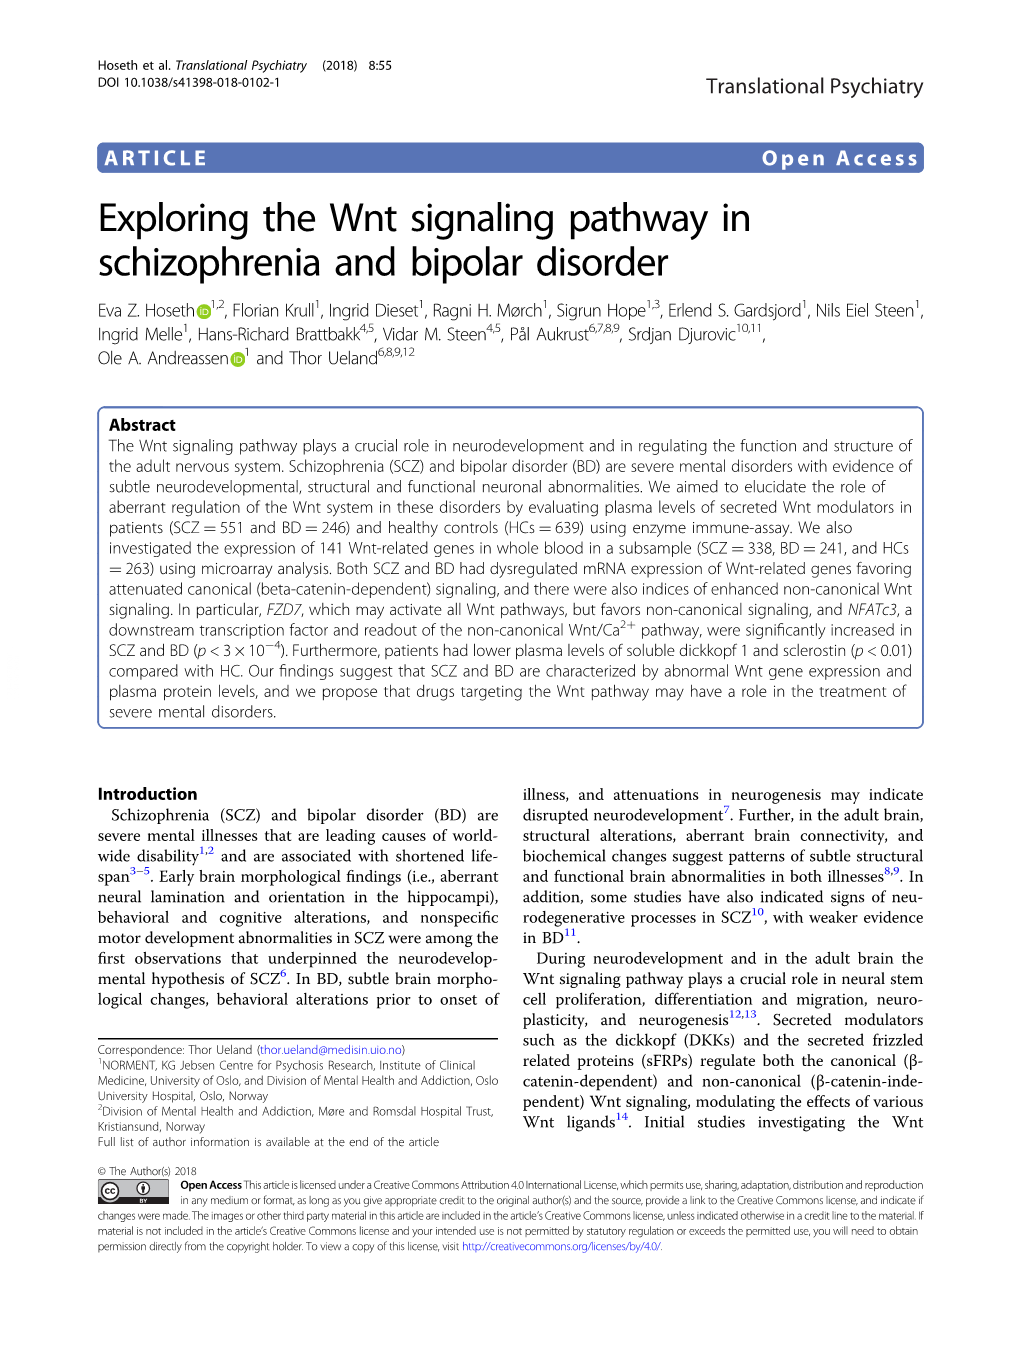 Exploring the Wnt Signaling Pathway in Schizophrenia and Bipolar Disorder Eva Z